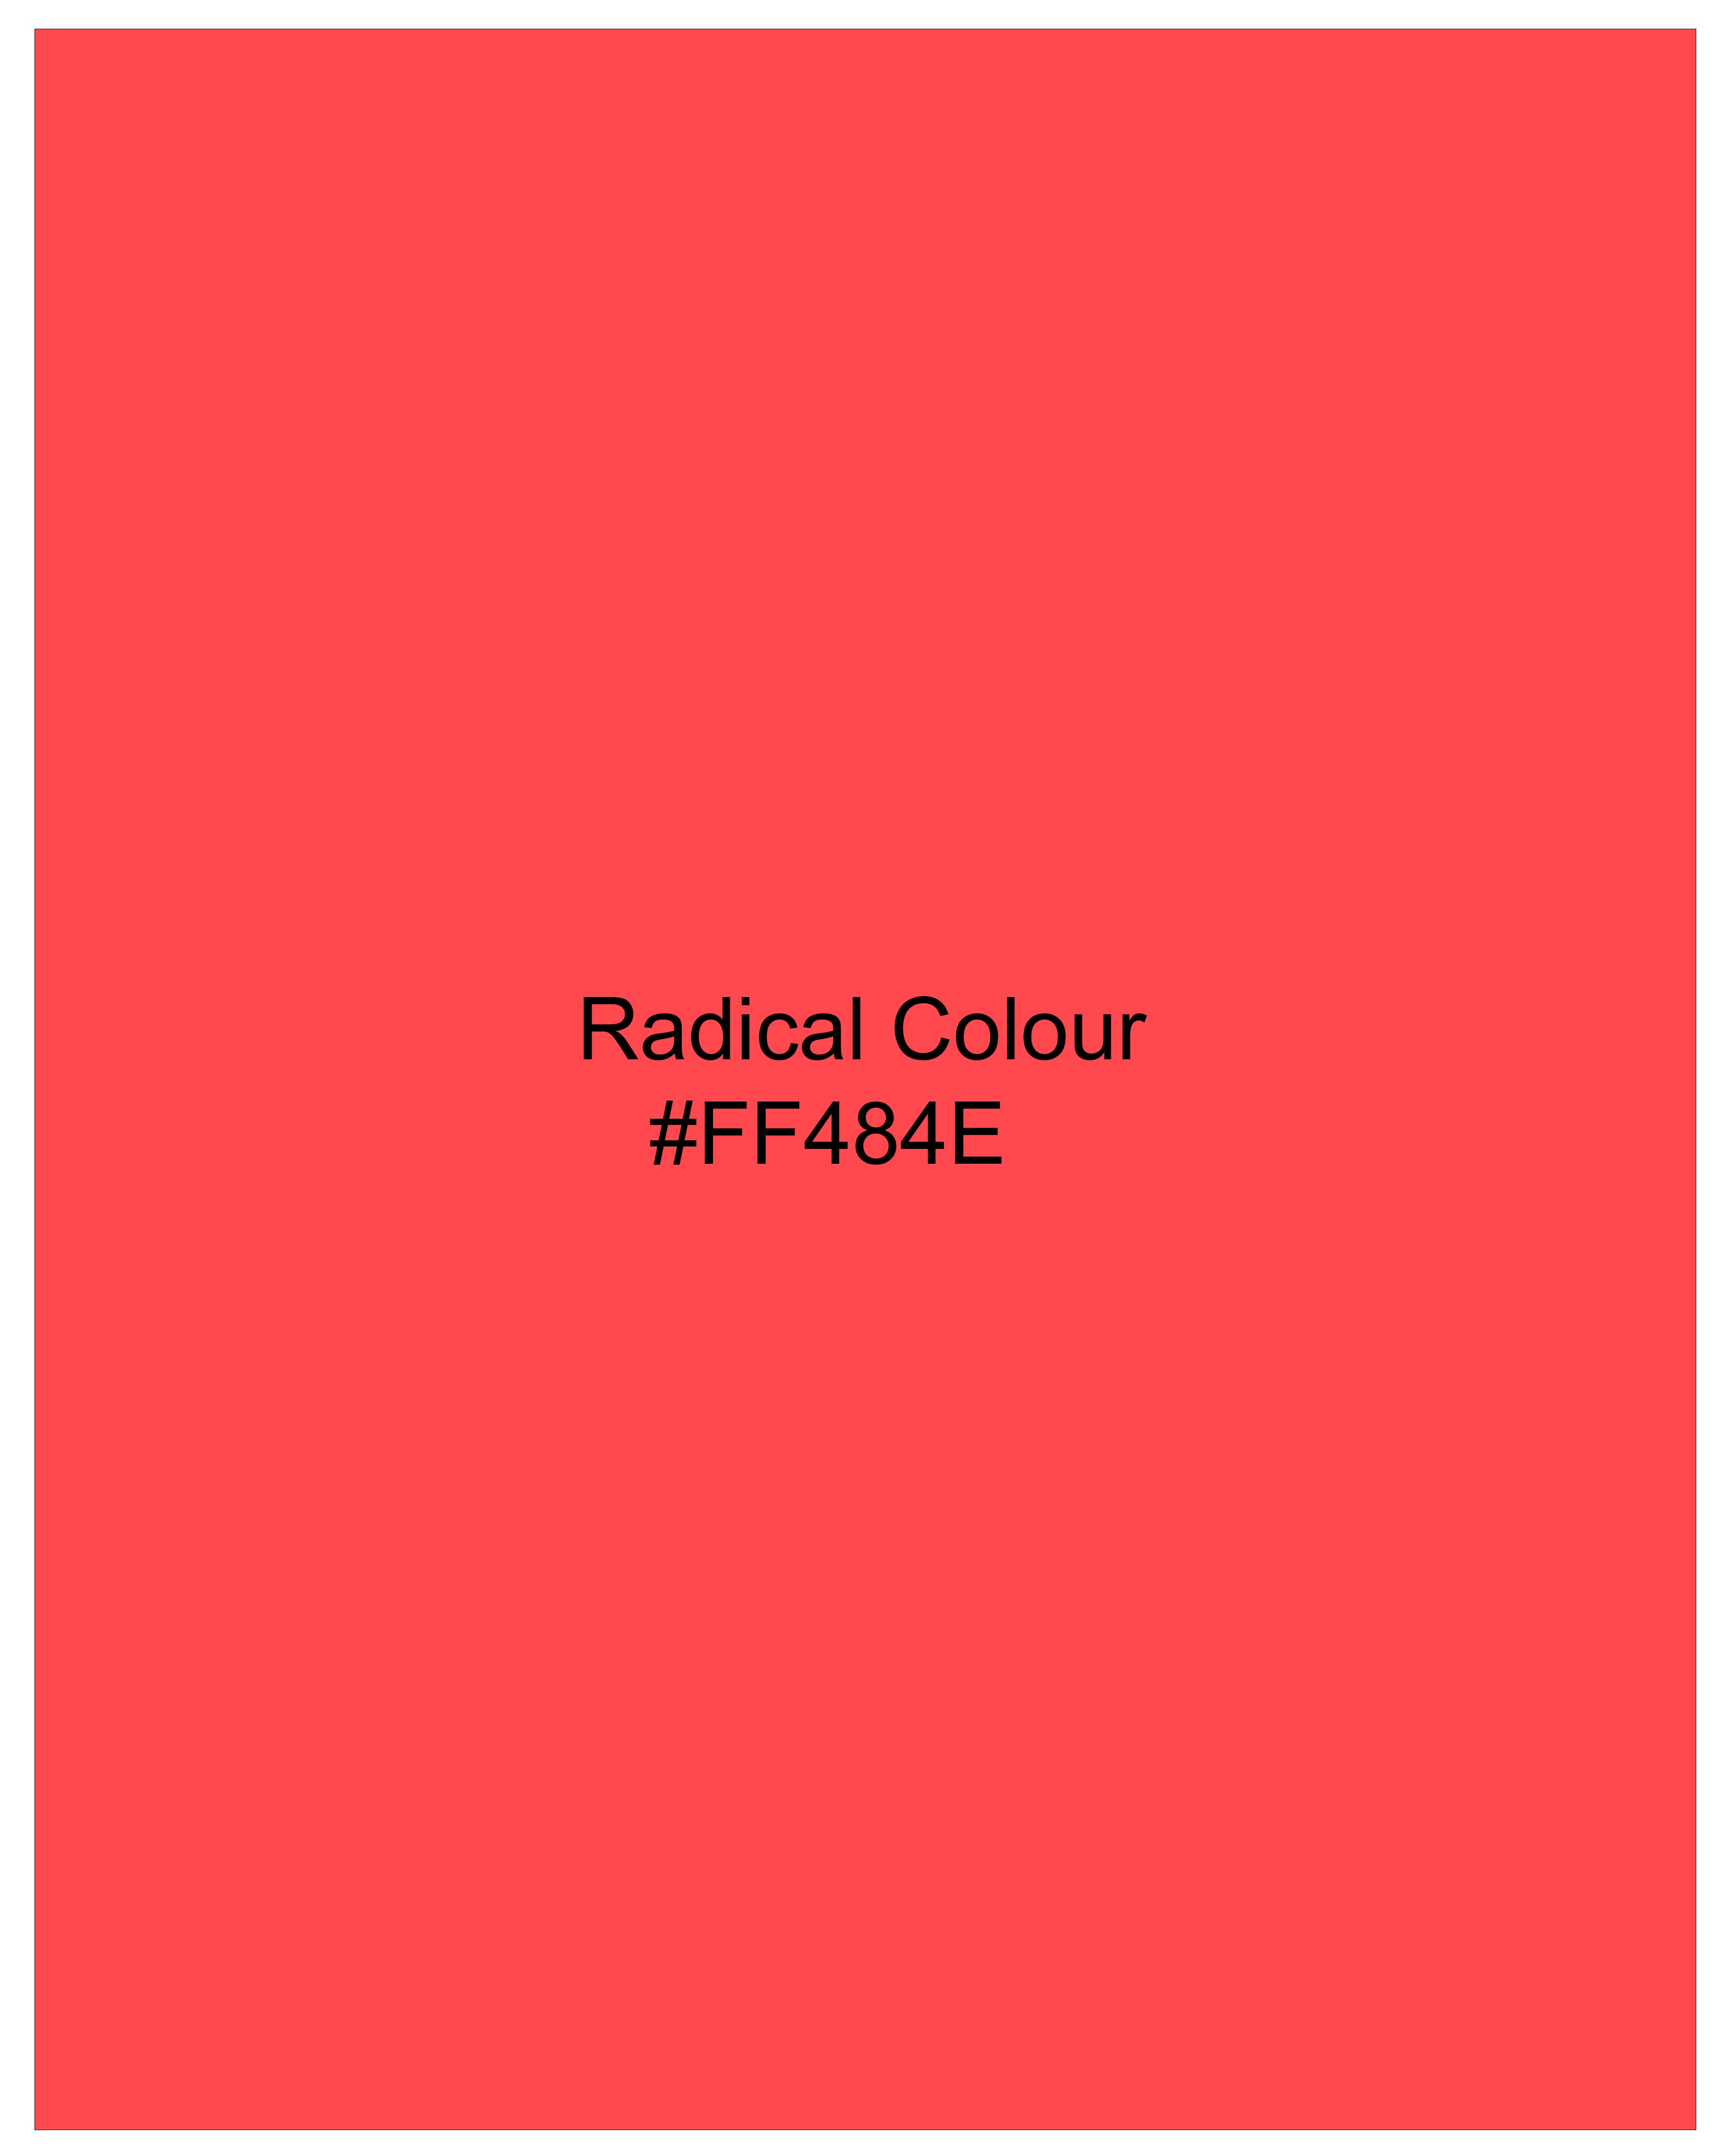 Radical Red Chambray Premium Cotton Shirt 9932-38, 9932-H-38, 9932-39, 9932-H-39, 9932-40, 9932-H-40, 9932-42, 9932-H-42, 9932-44, 9932-H-44, 9932-46, 9932-H-46, 9932-48, 9932-H-48, 9932-50, 9932-H-50, 9932-52, 9932-H-52